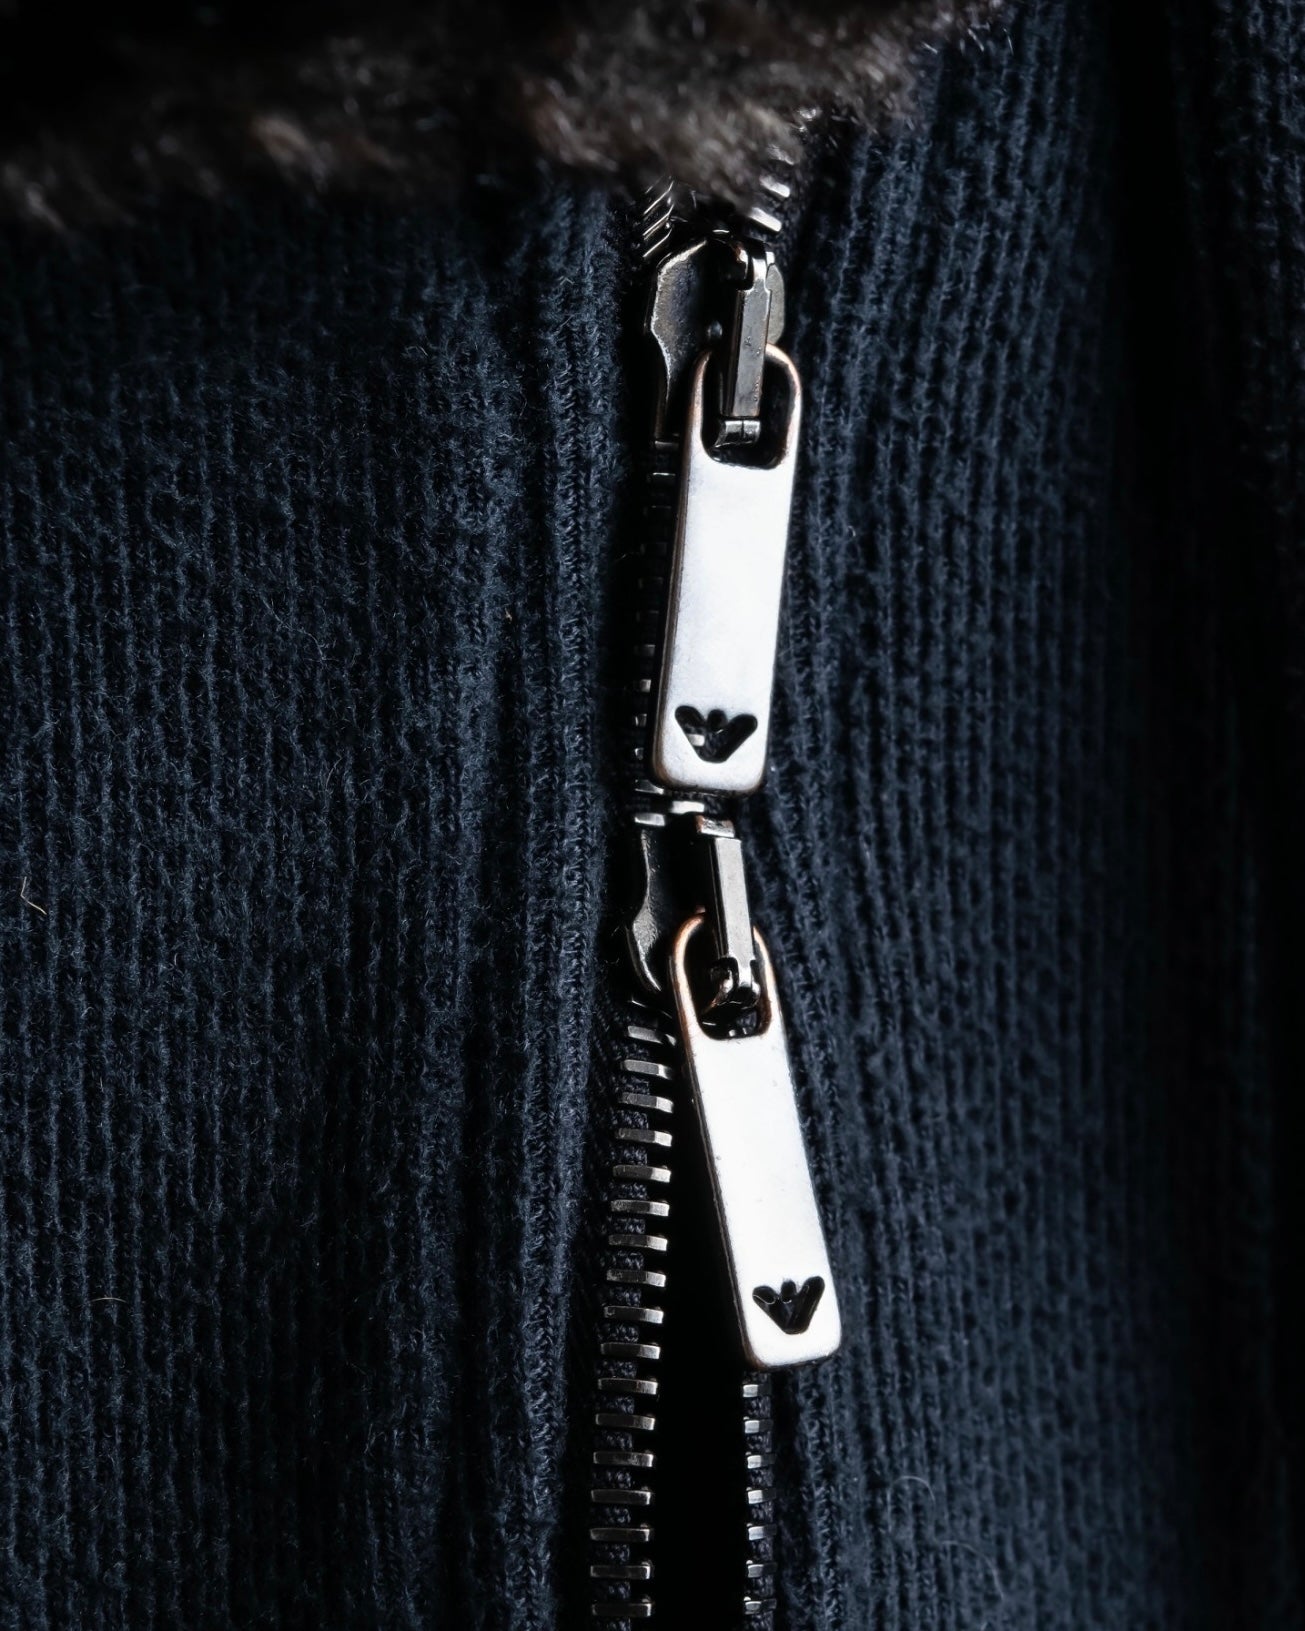 "Emporio Armani" double zip fur collar coat